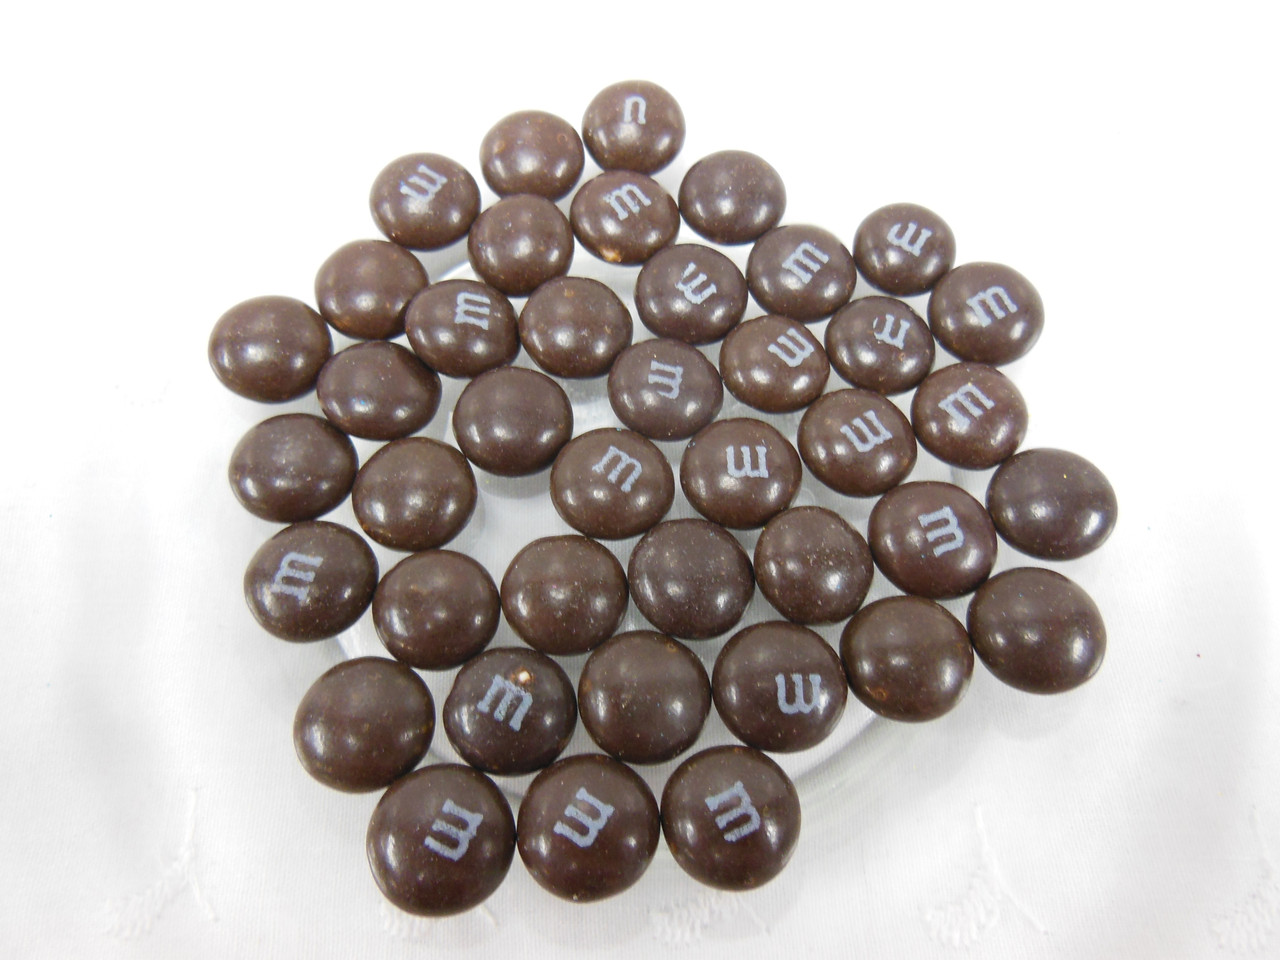 Sale! My M&M's Chocolate Candies Brown 1 LB (453g)